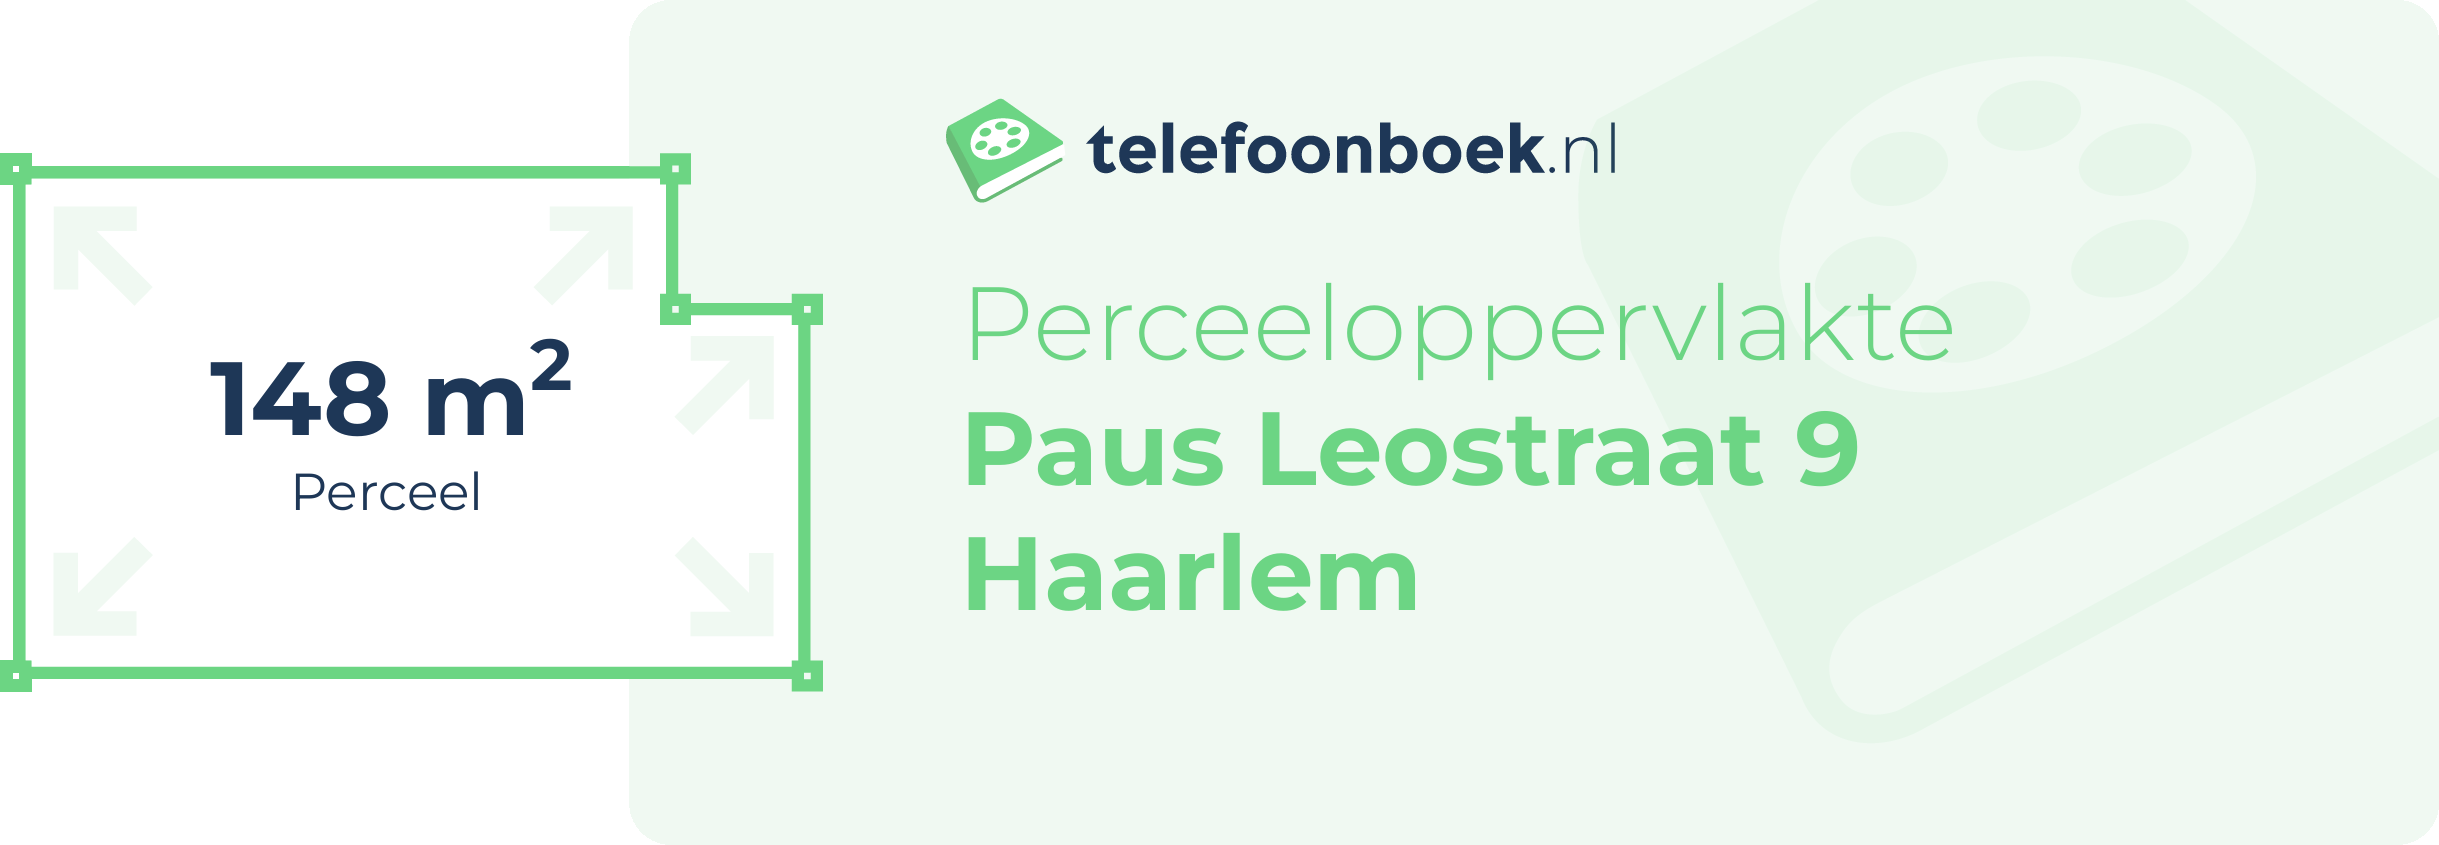 Perceeloppervlakte Paus Leostraat 9 Haarlem